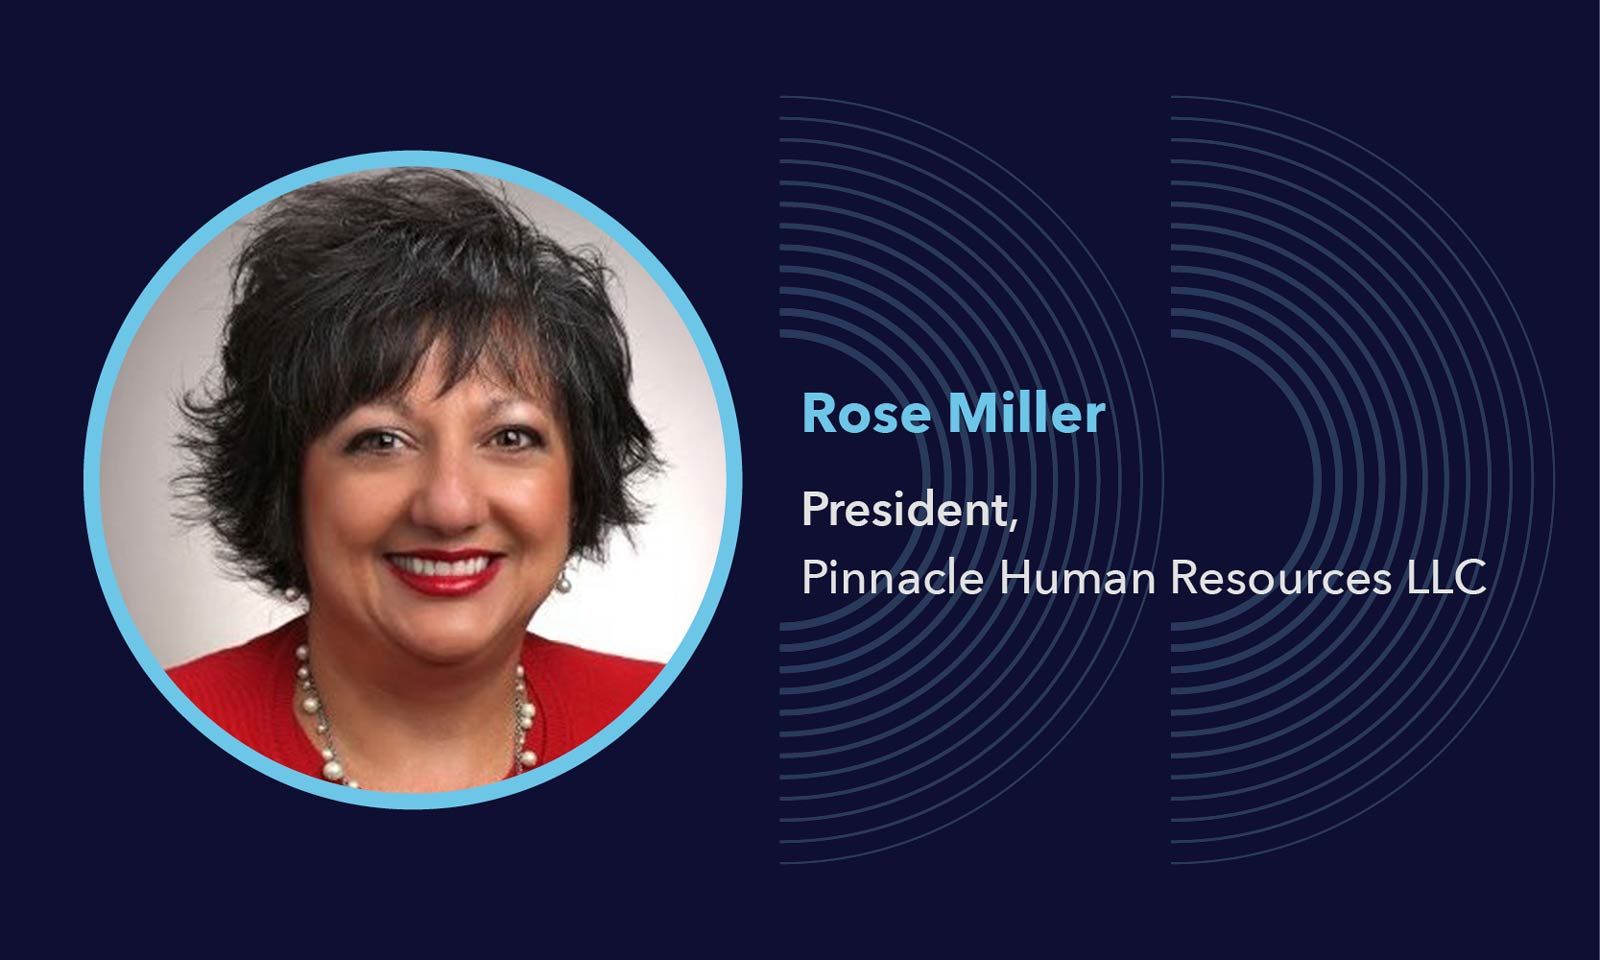 Rose Miller from Pinnacle Human Resources LLC